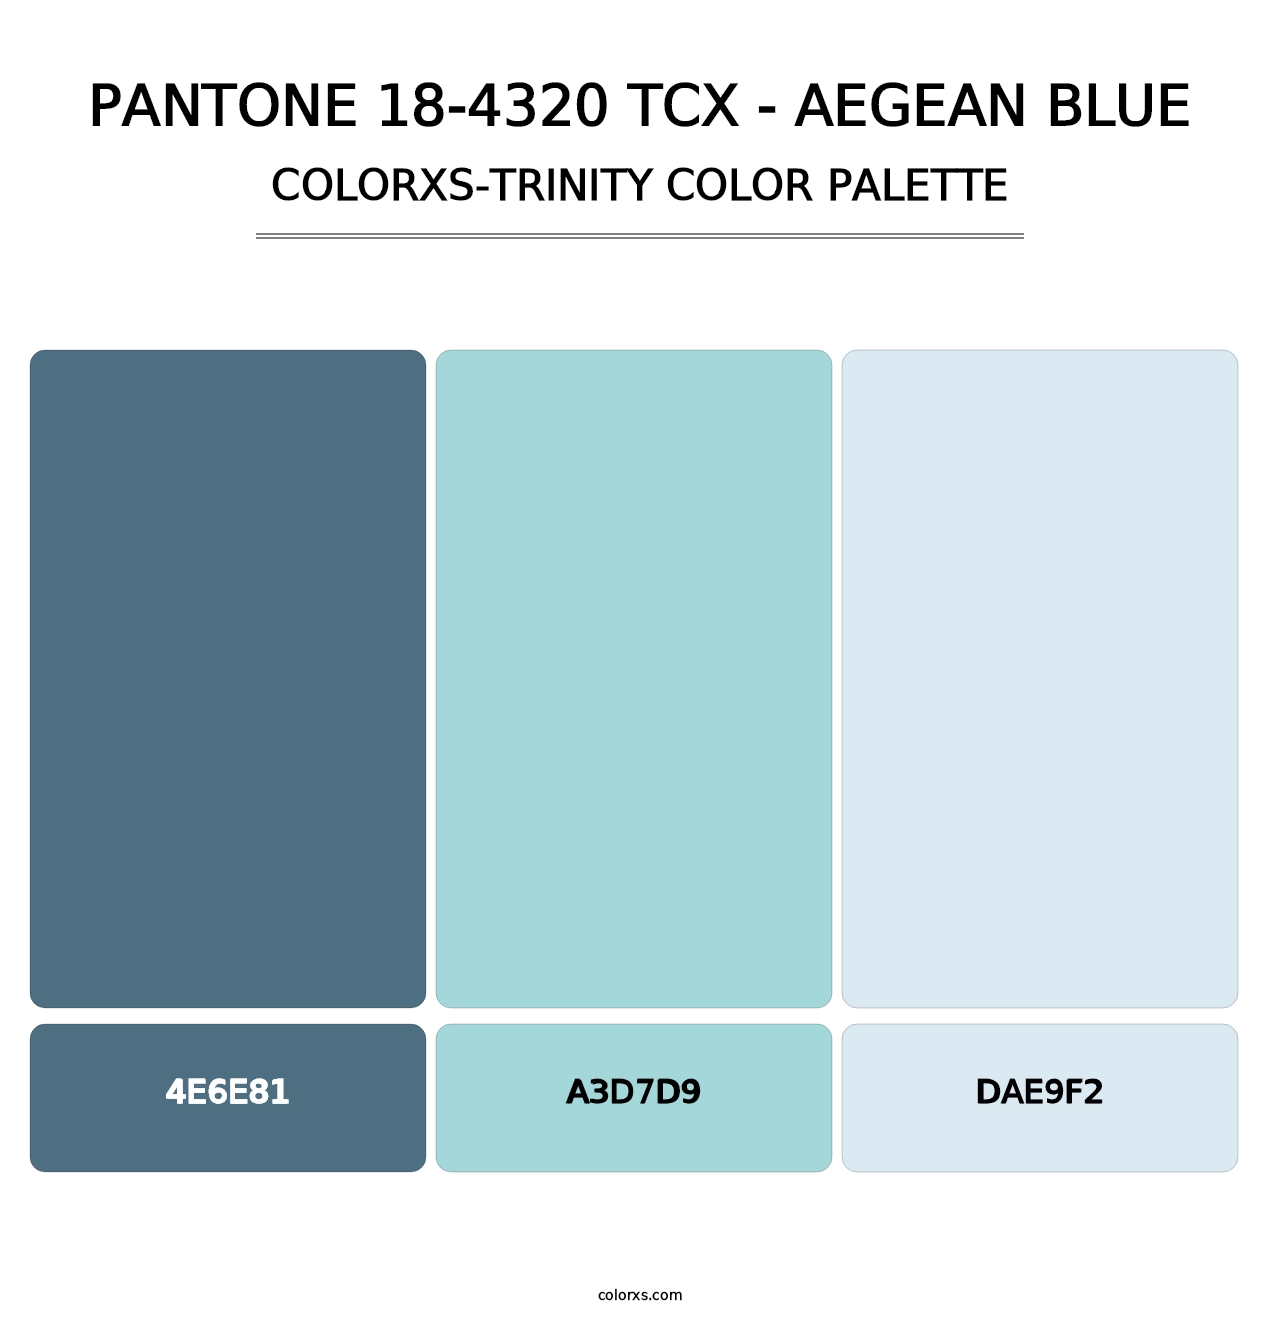 PANTONE 18-4320 TCX - Aegean Blue - Colorxs Trinity Palette